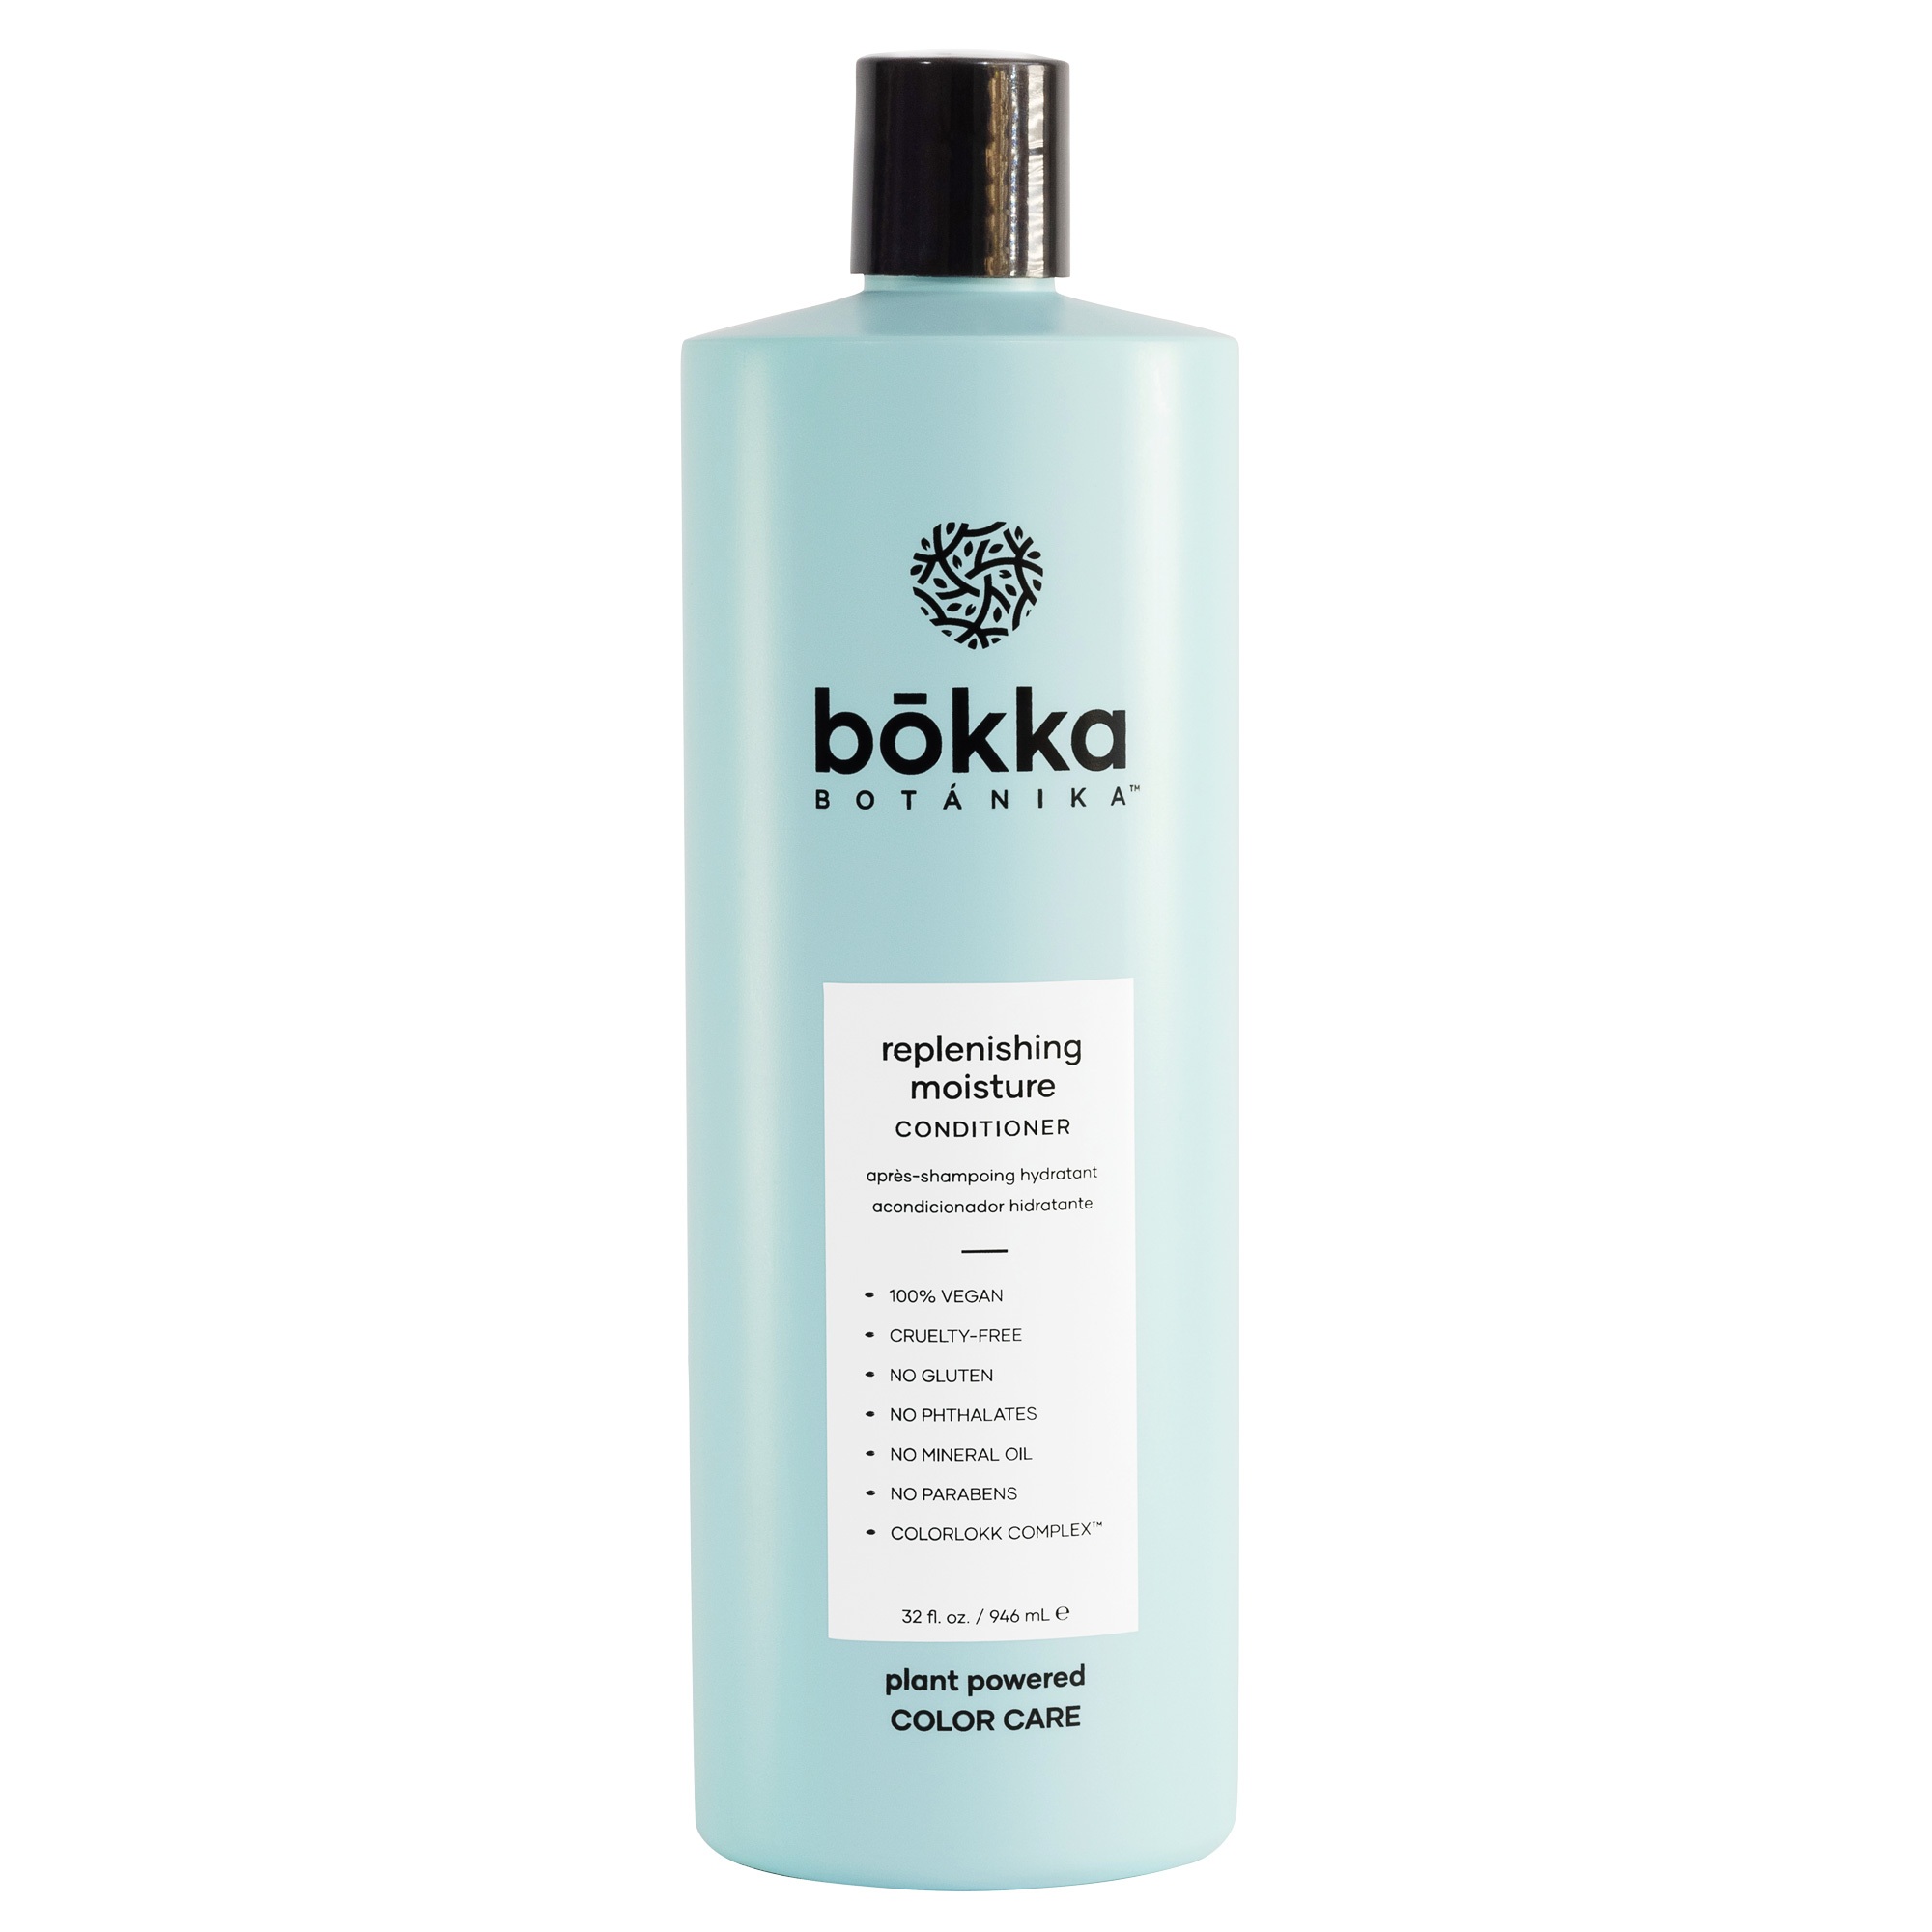 bokka BOTANIKA Replenishing Moisture Conditioner